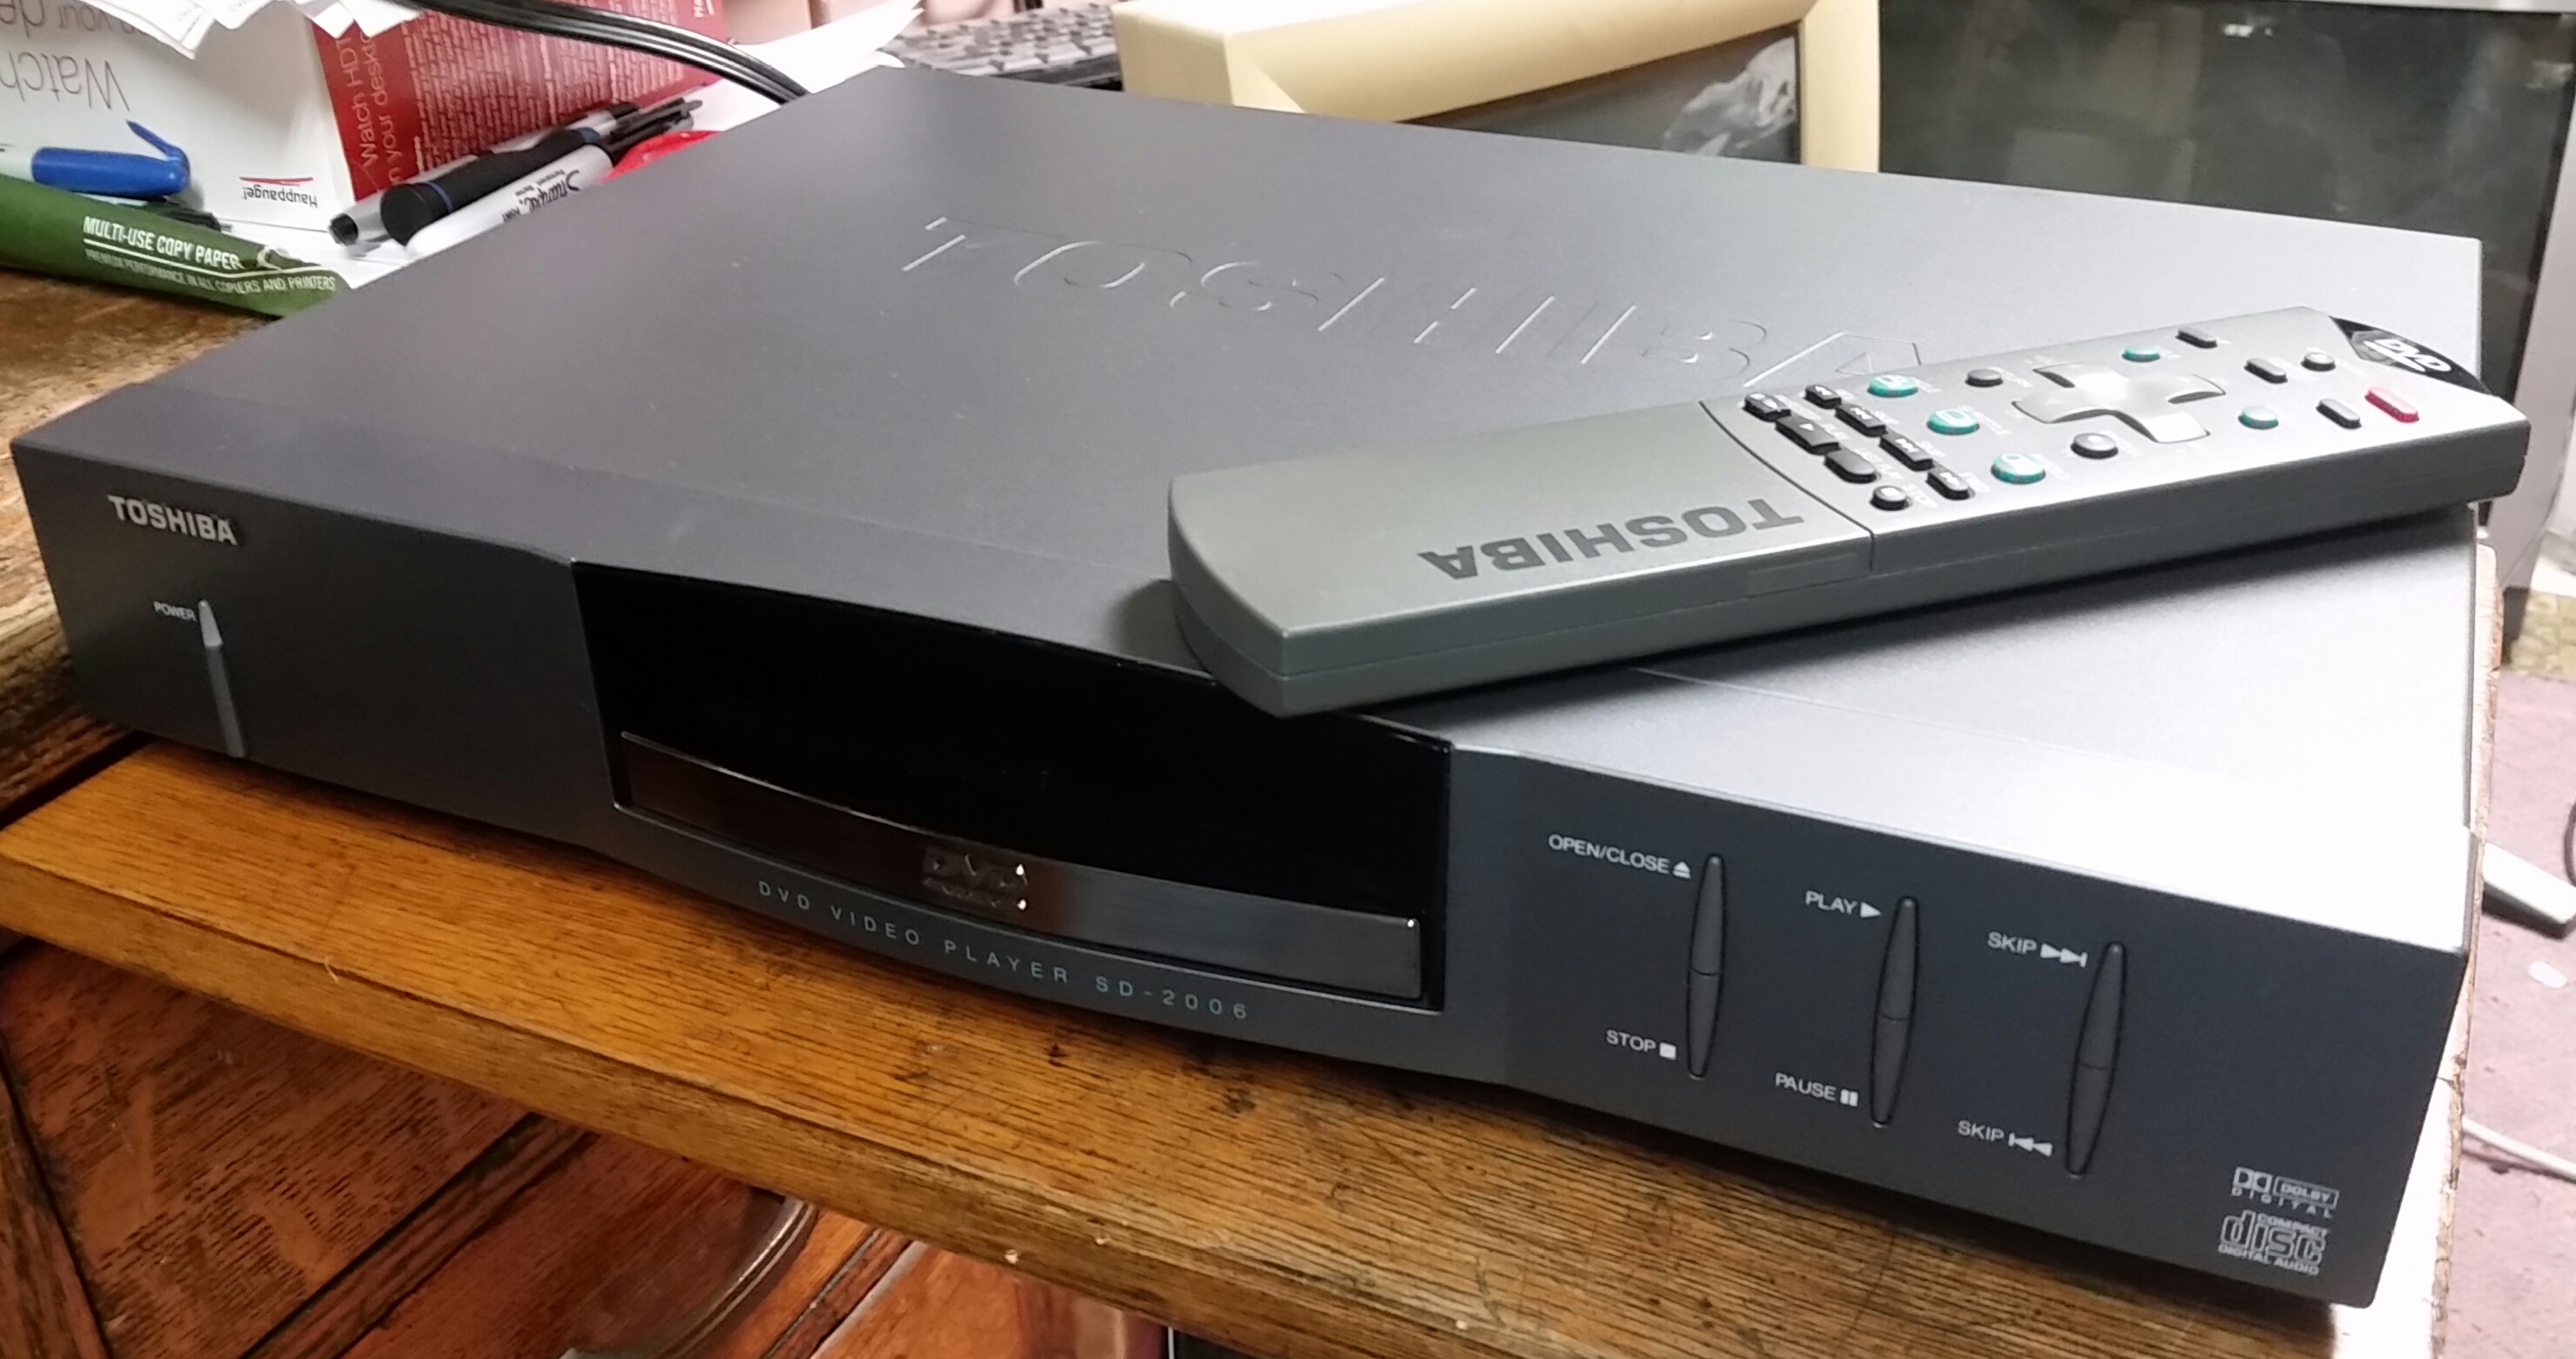 технологии второй половины 20 века: Toshiba SD-2006 DVD Player